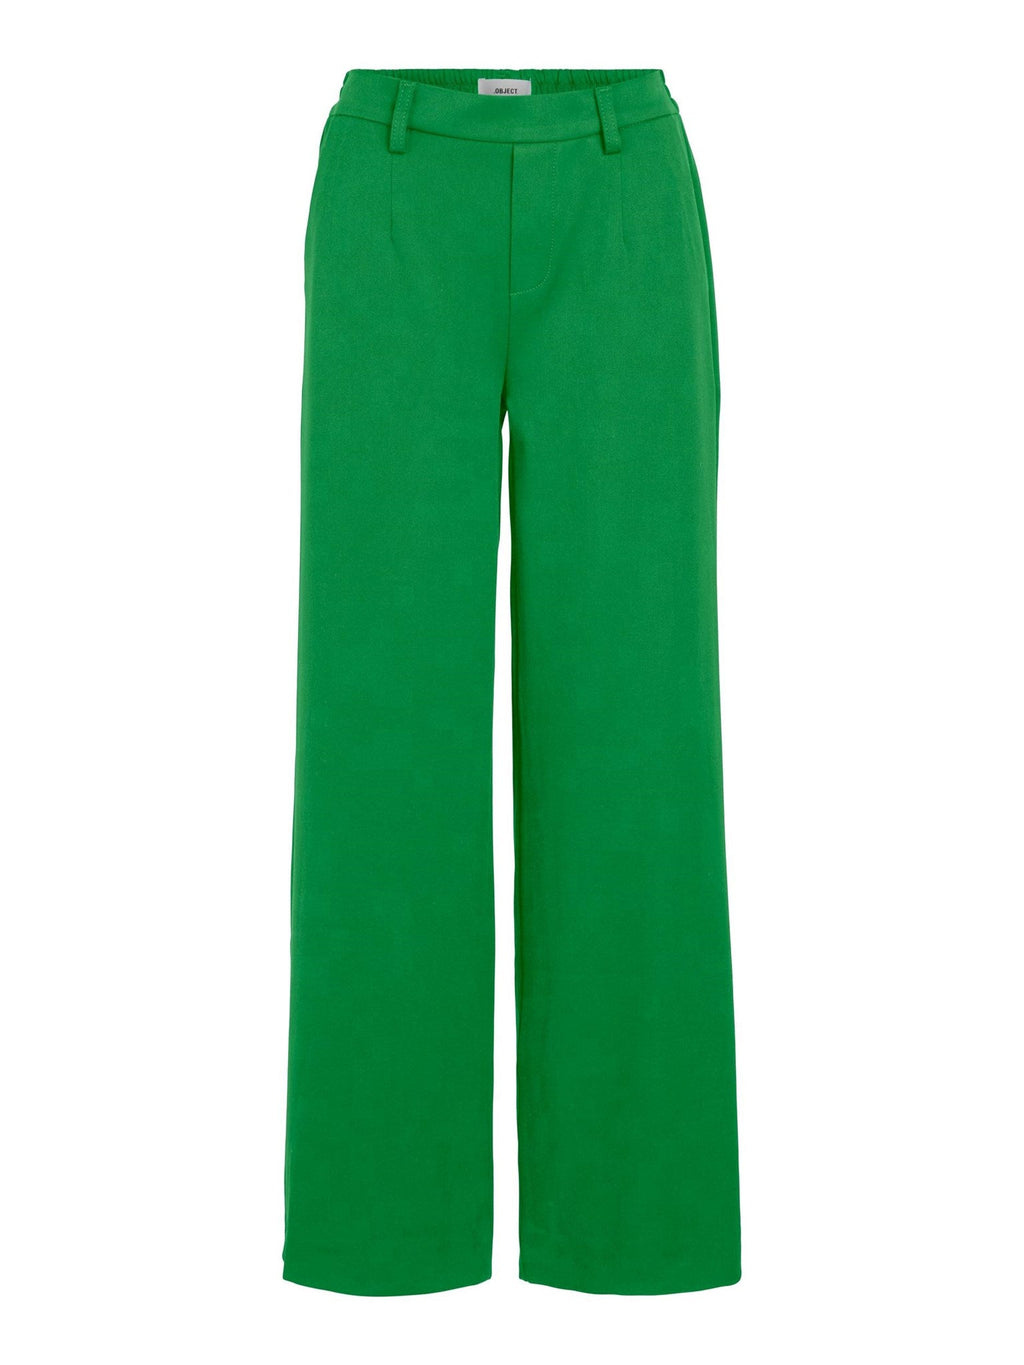 Lisa larga Pants - Fern Green